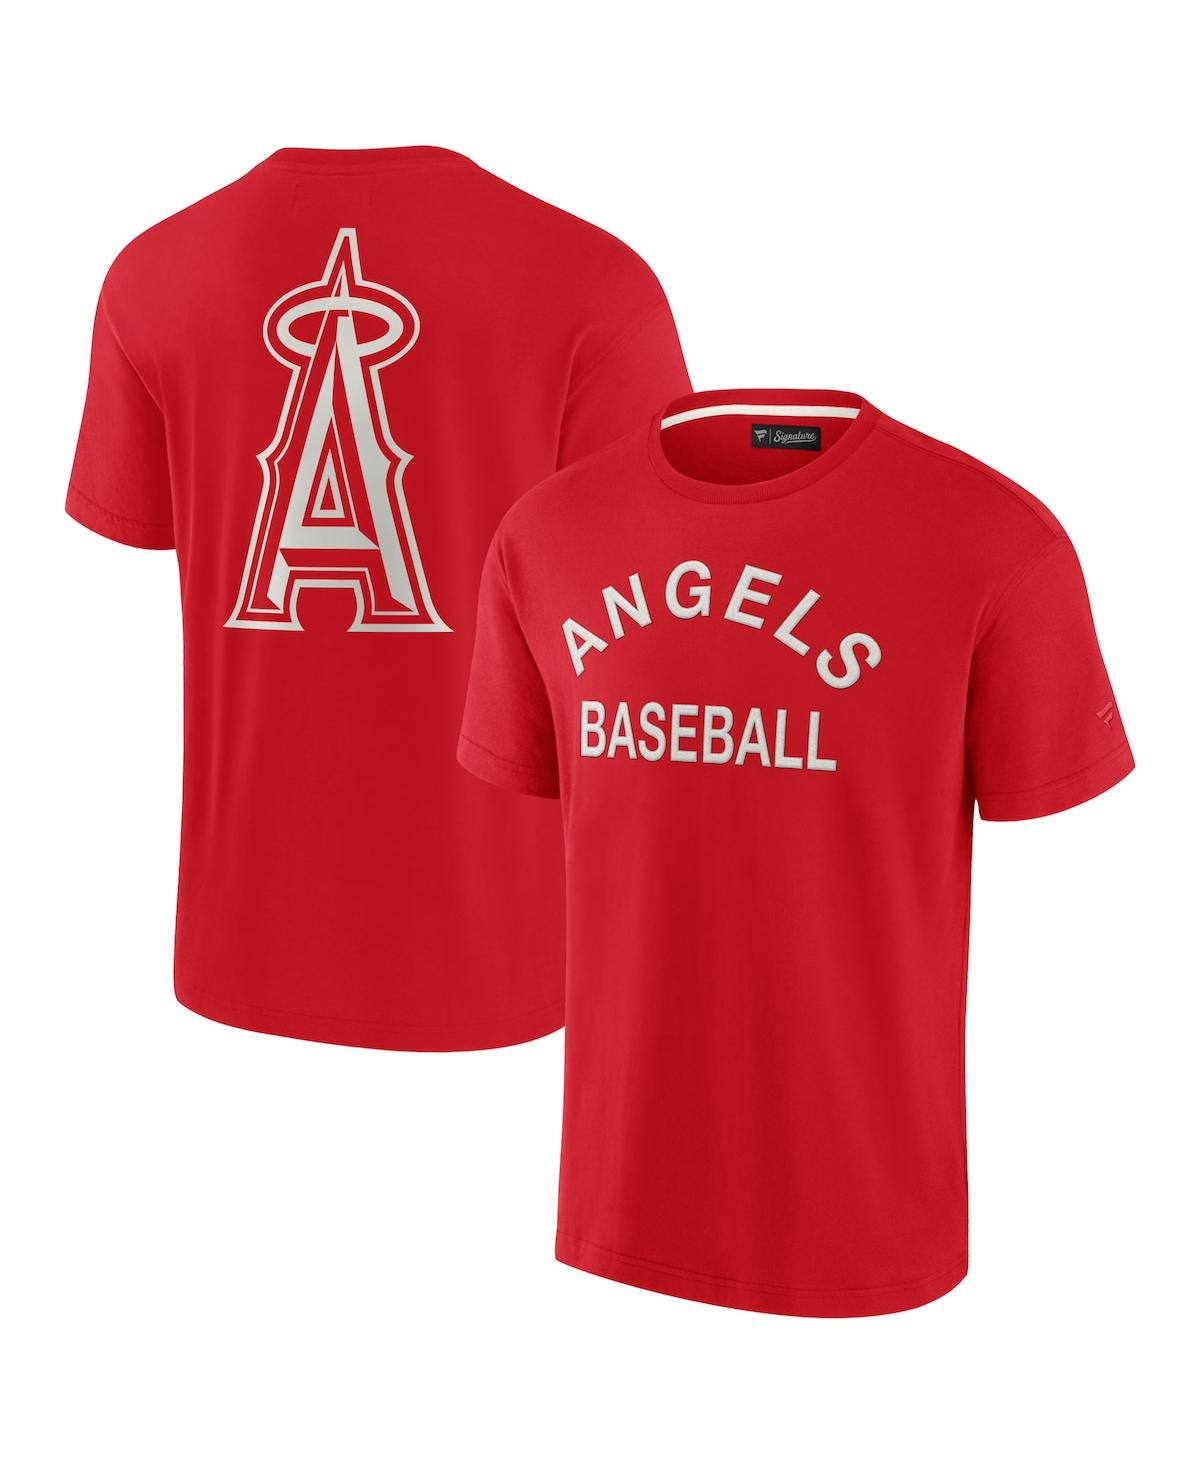 Fanatics Signature Men's And Women's  Red Los Angeles Angels Super Soft Short Sleeve T-shirt